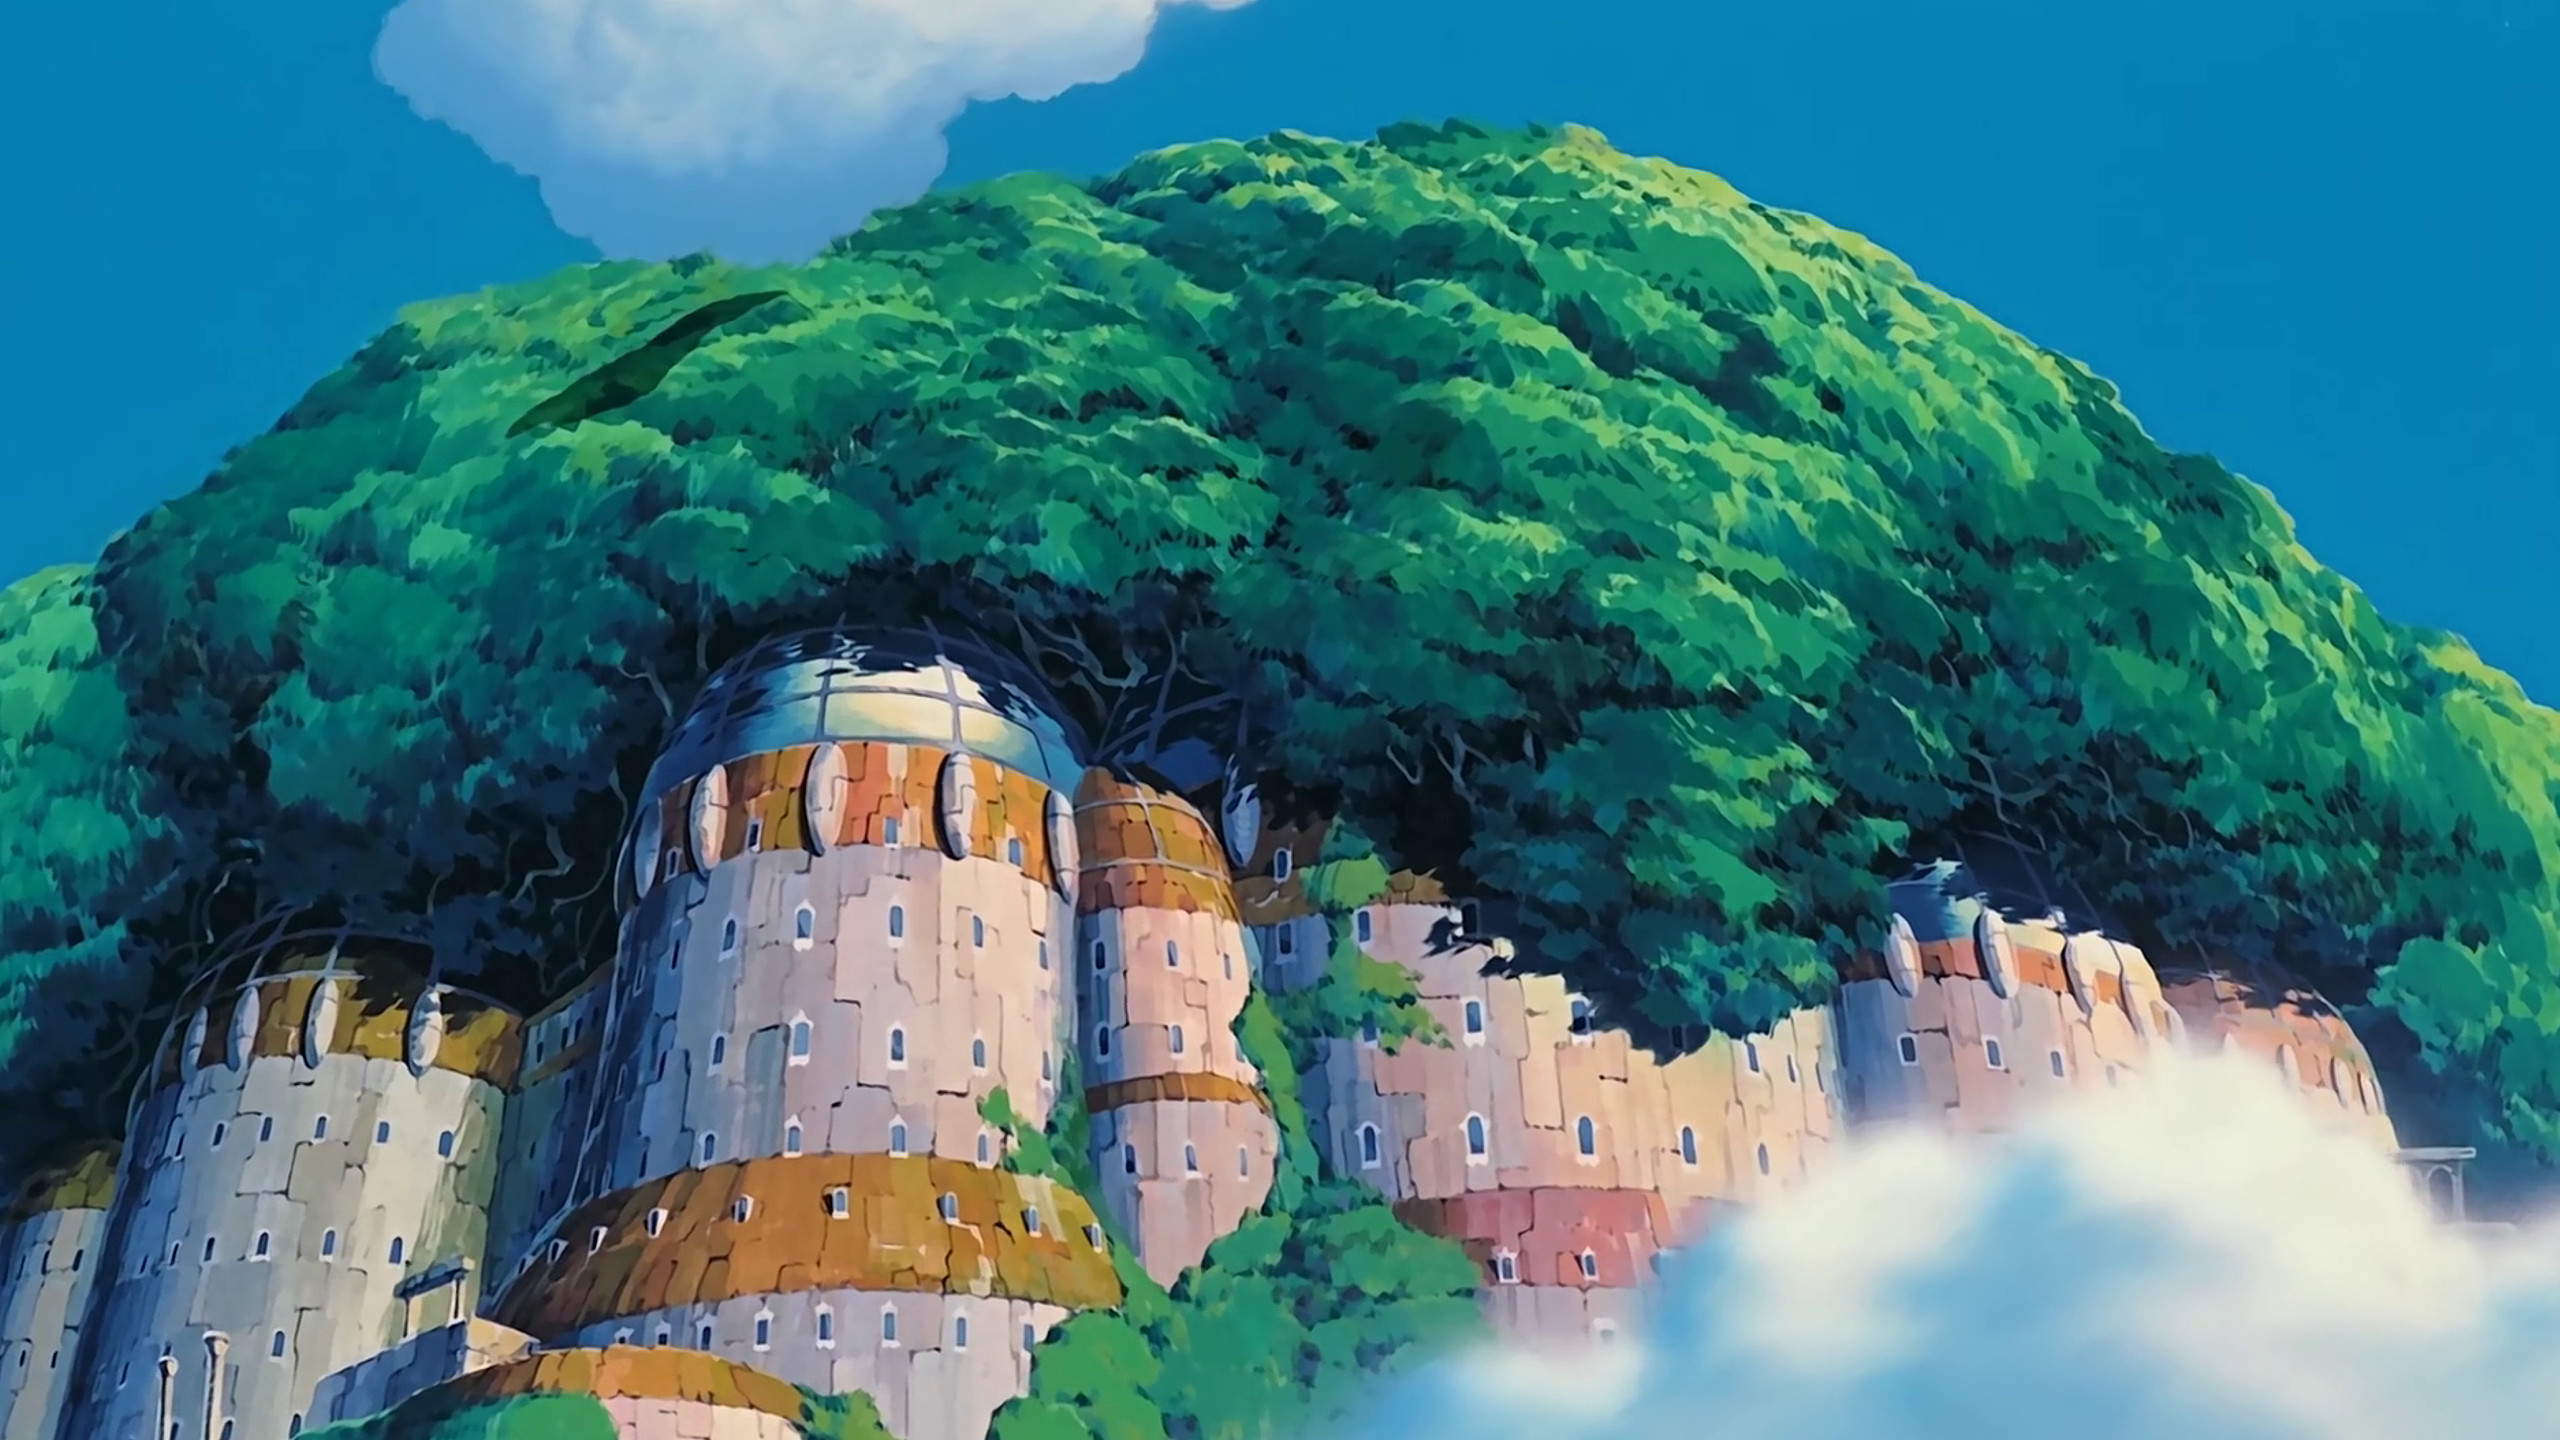 2560x1440 Studio Ghibli Wallpaper HD For Desktop